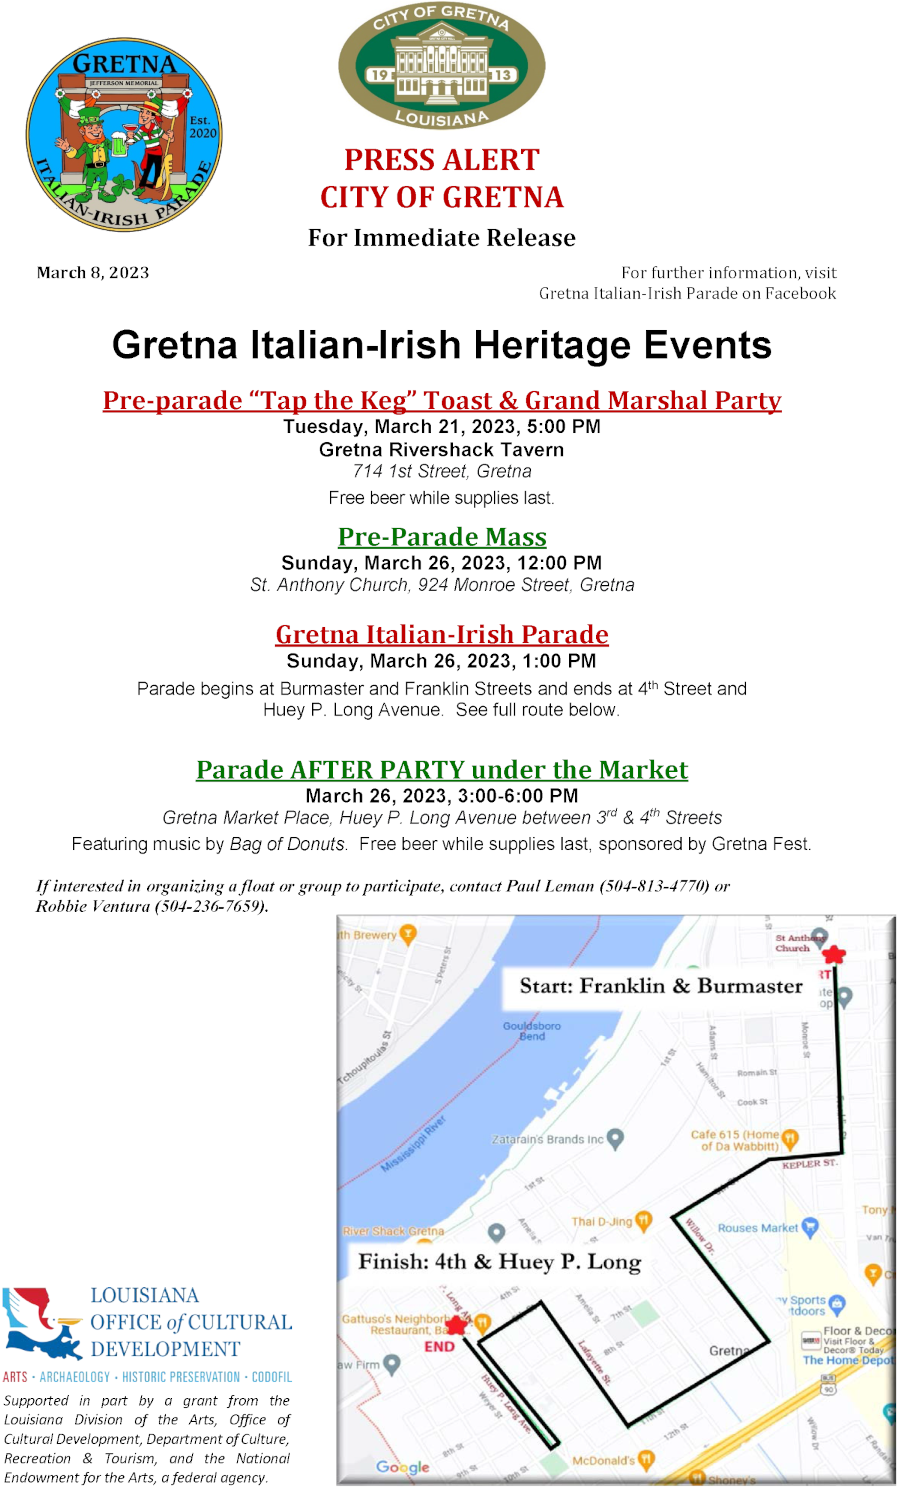 Gretna ItalianIrish Parade and Heritage Events March 2126, 2023